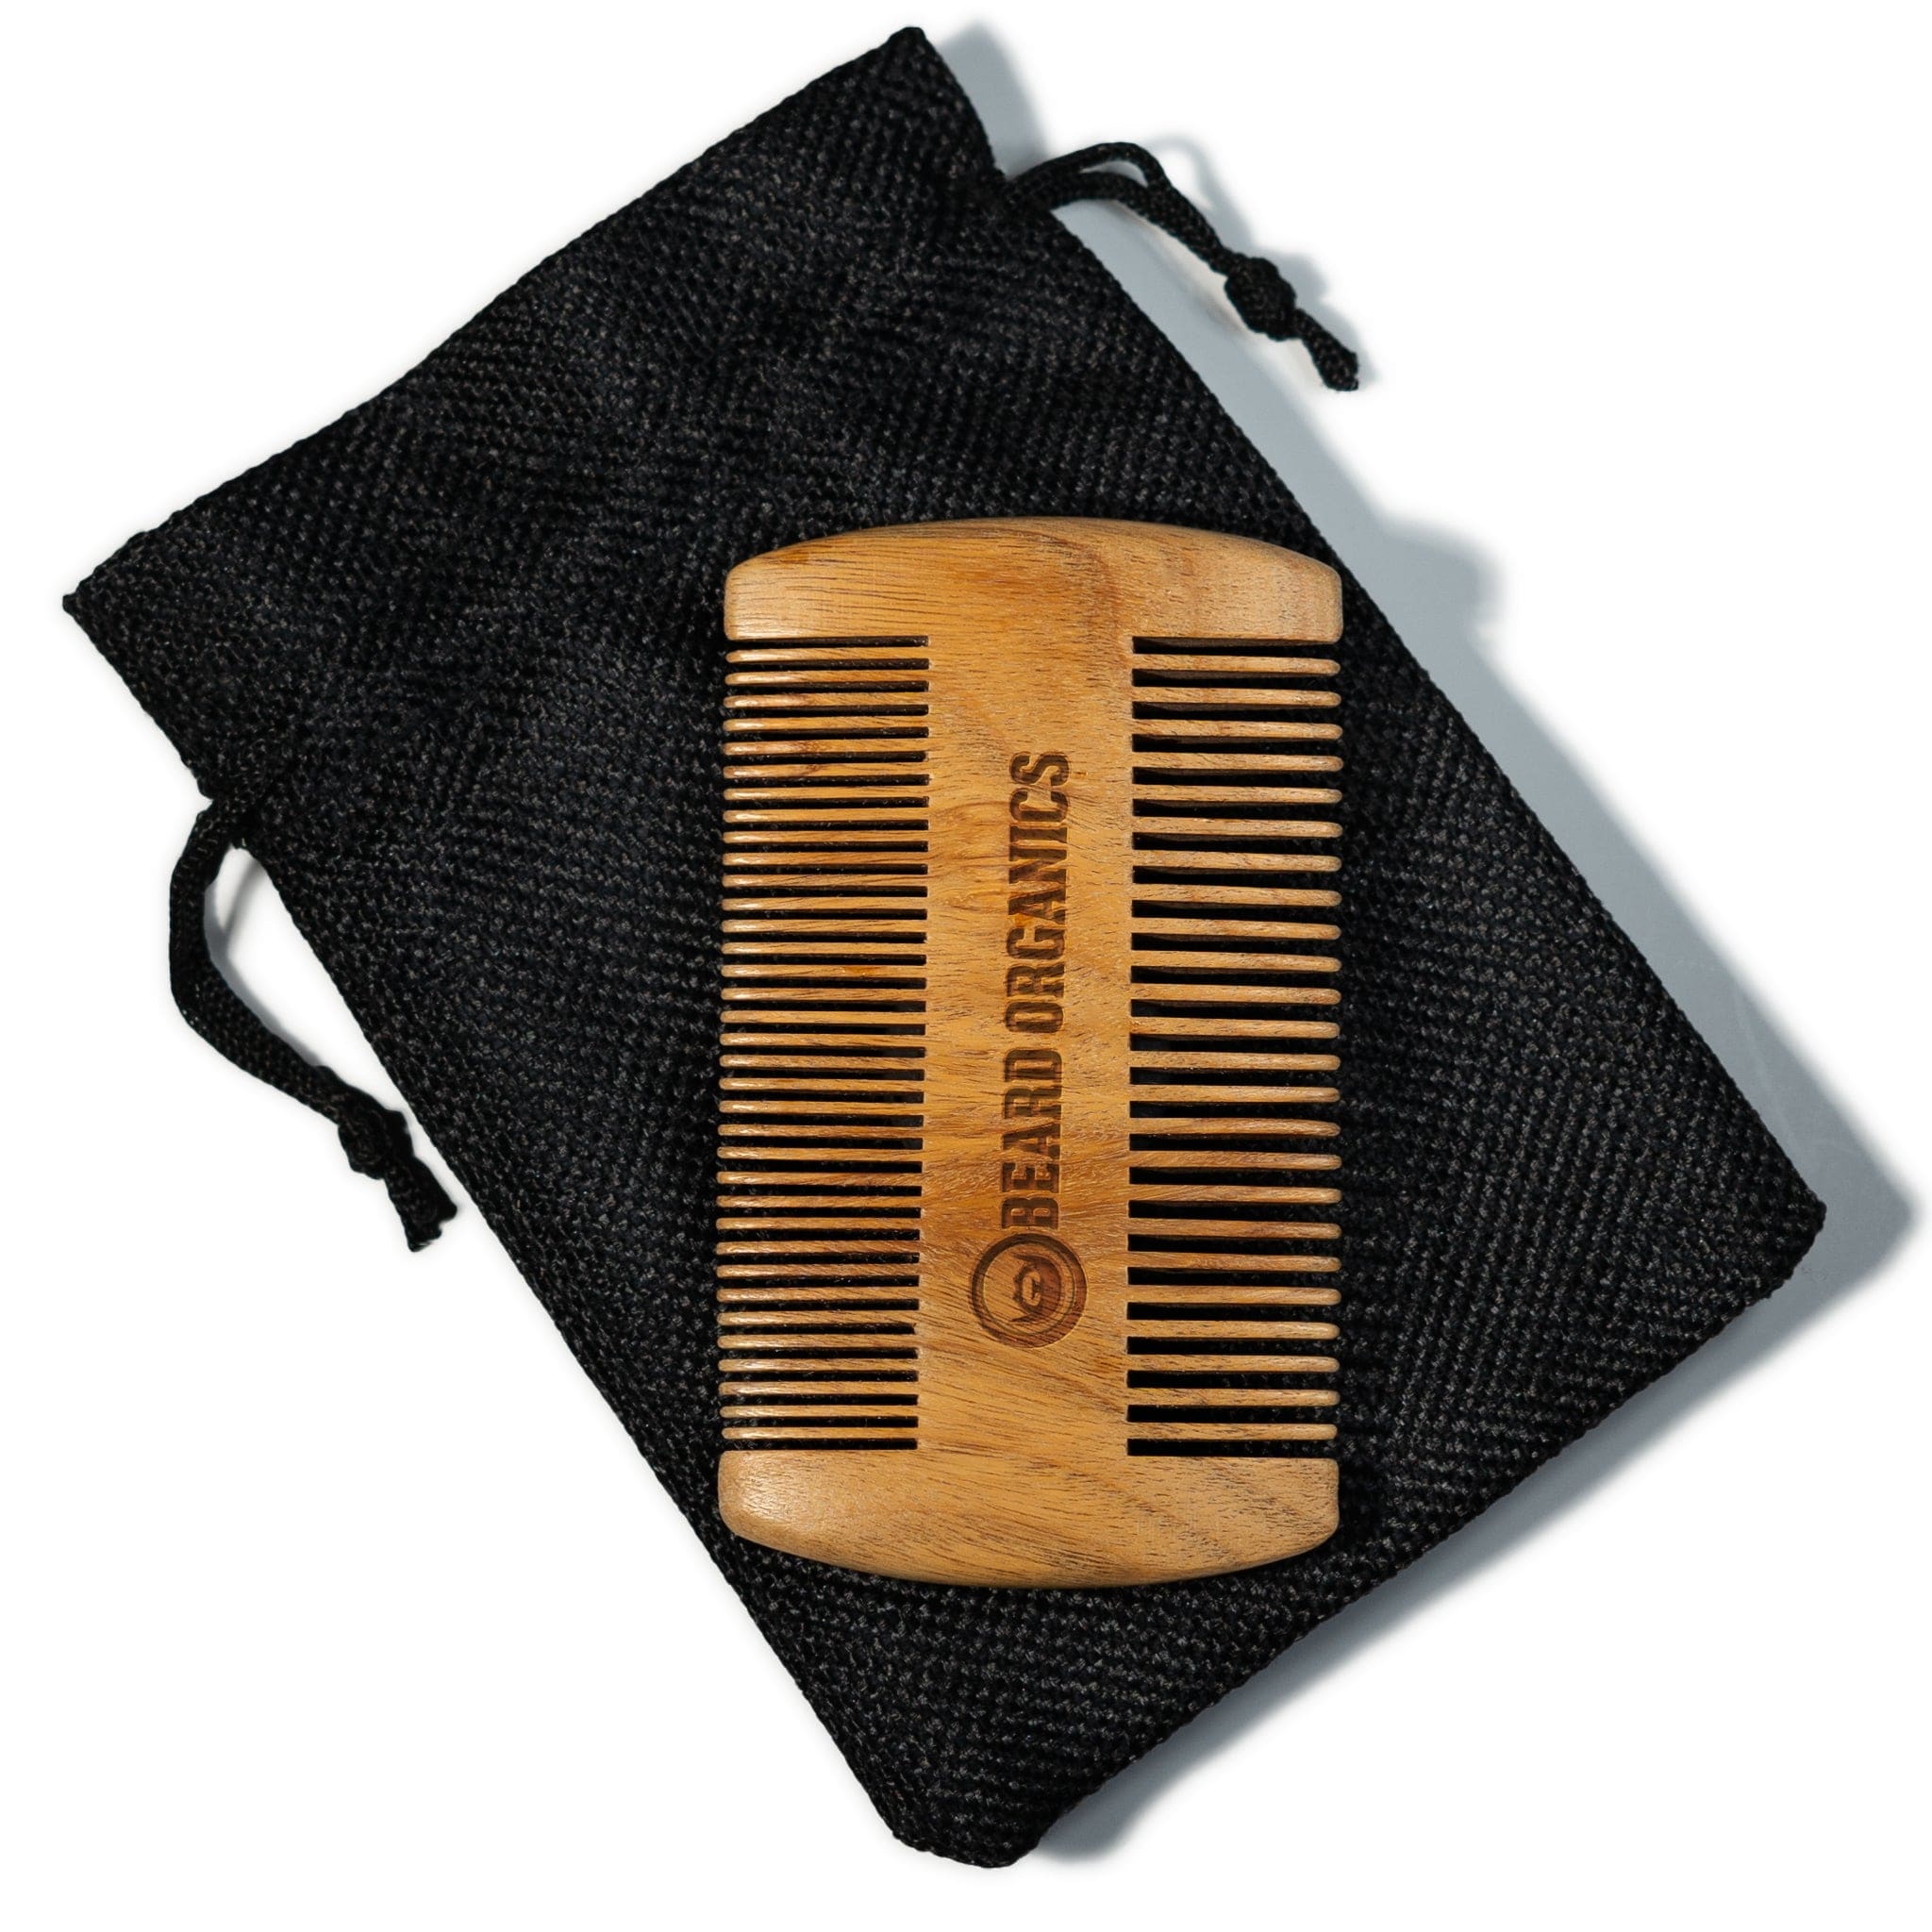 Natural Sandalwood Beard Comb by Beard Organics